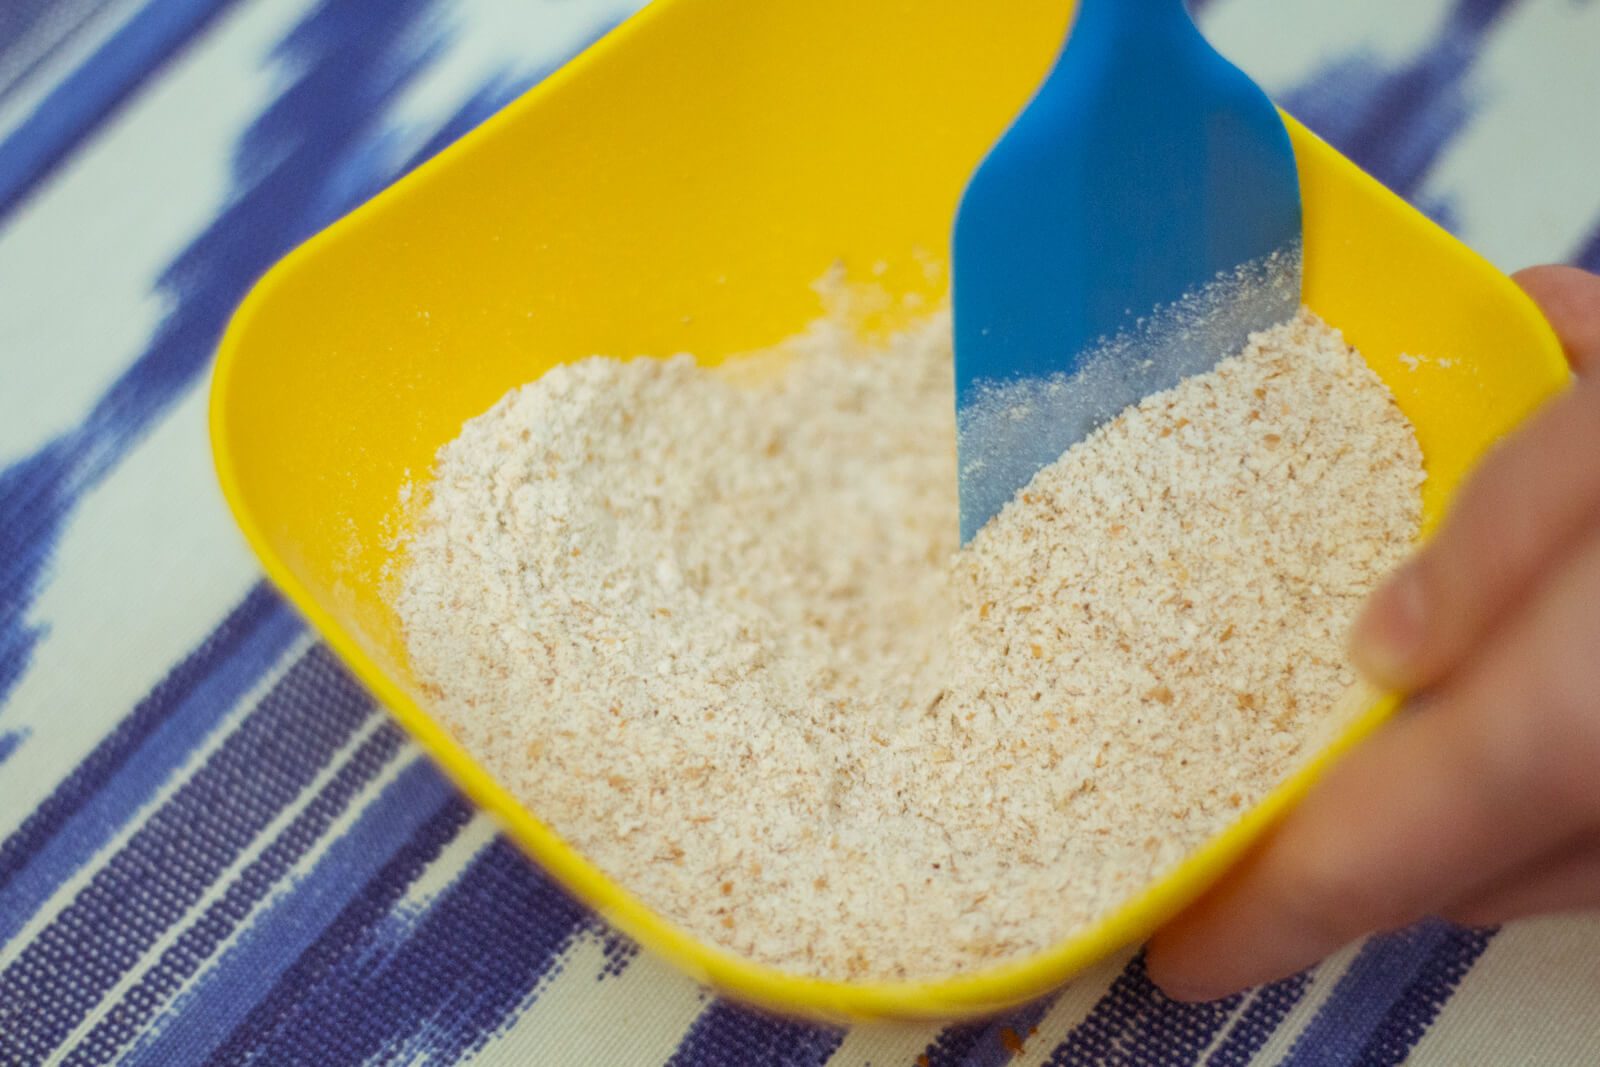 Mix 40 g whole wheat flour, 20 g plain (all-purpose) flour, 0.33 g salt and 1 g cinnamon.